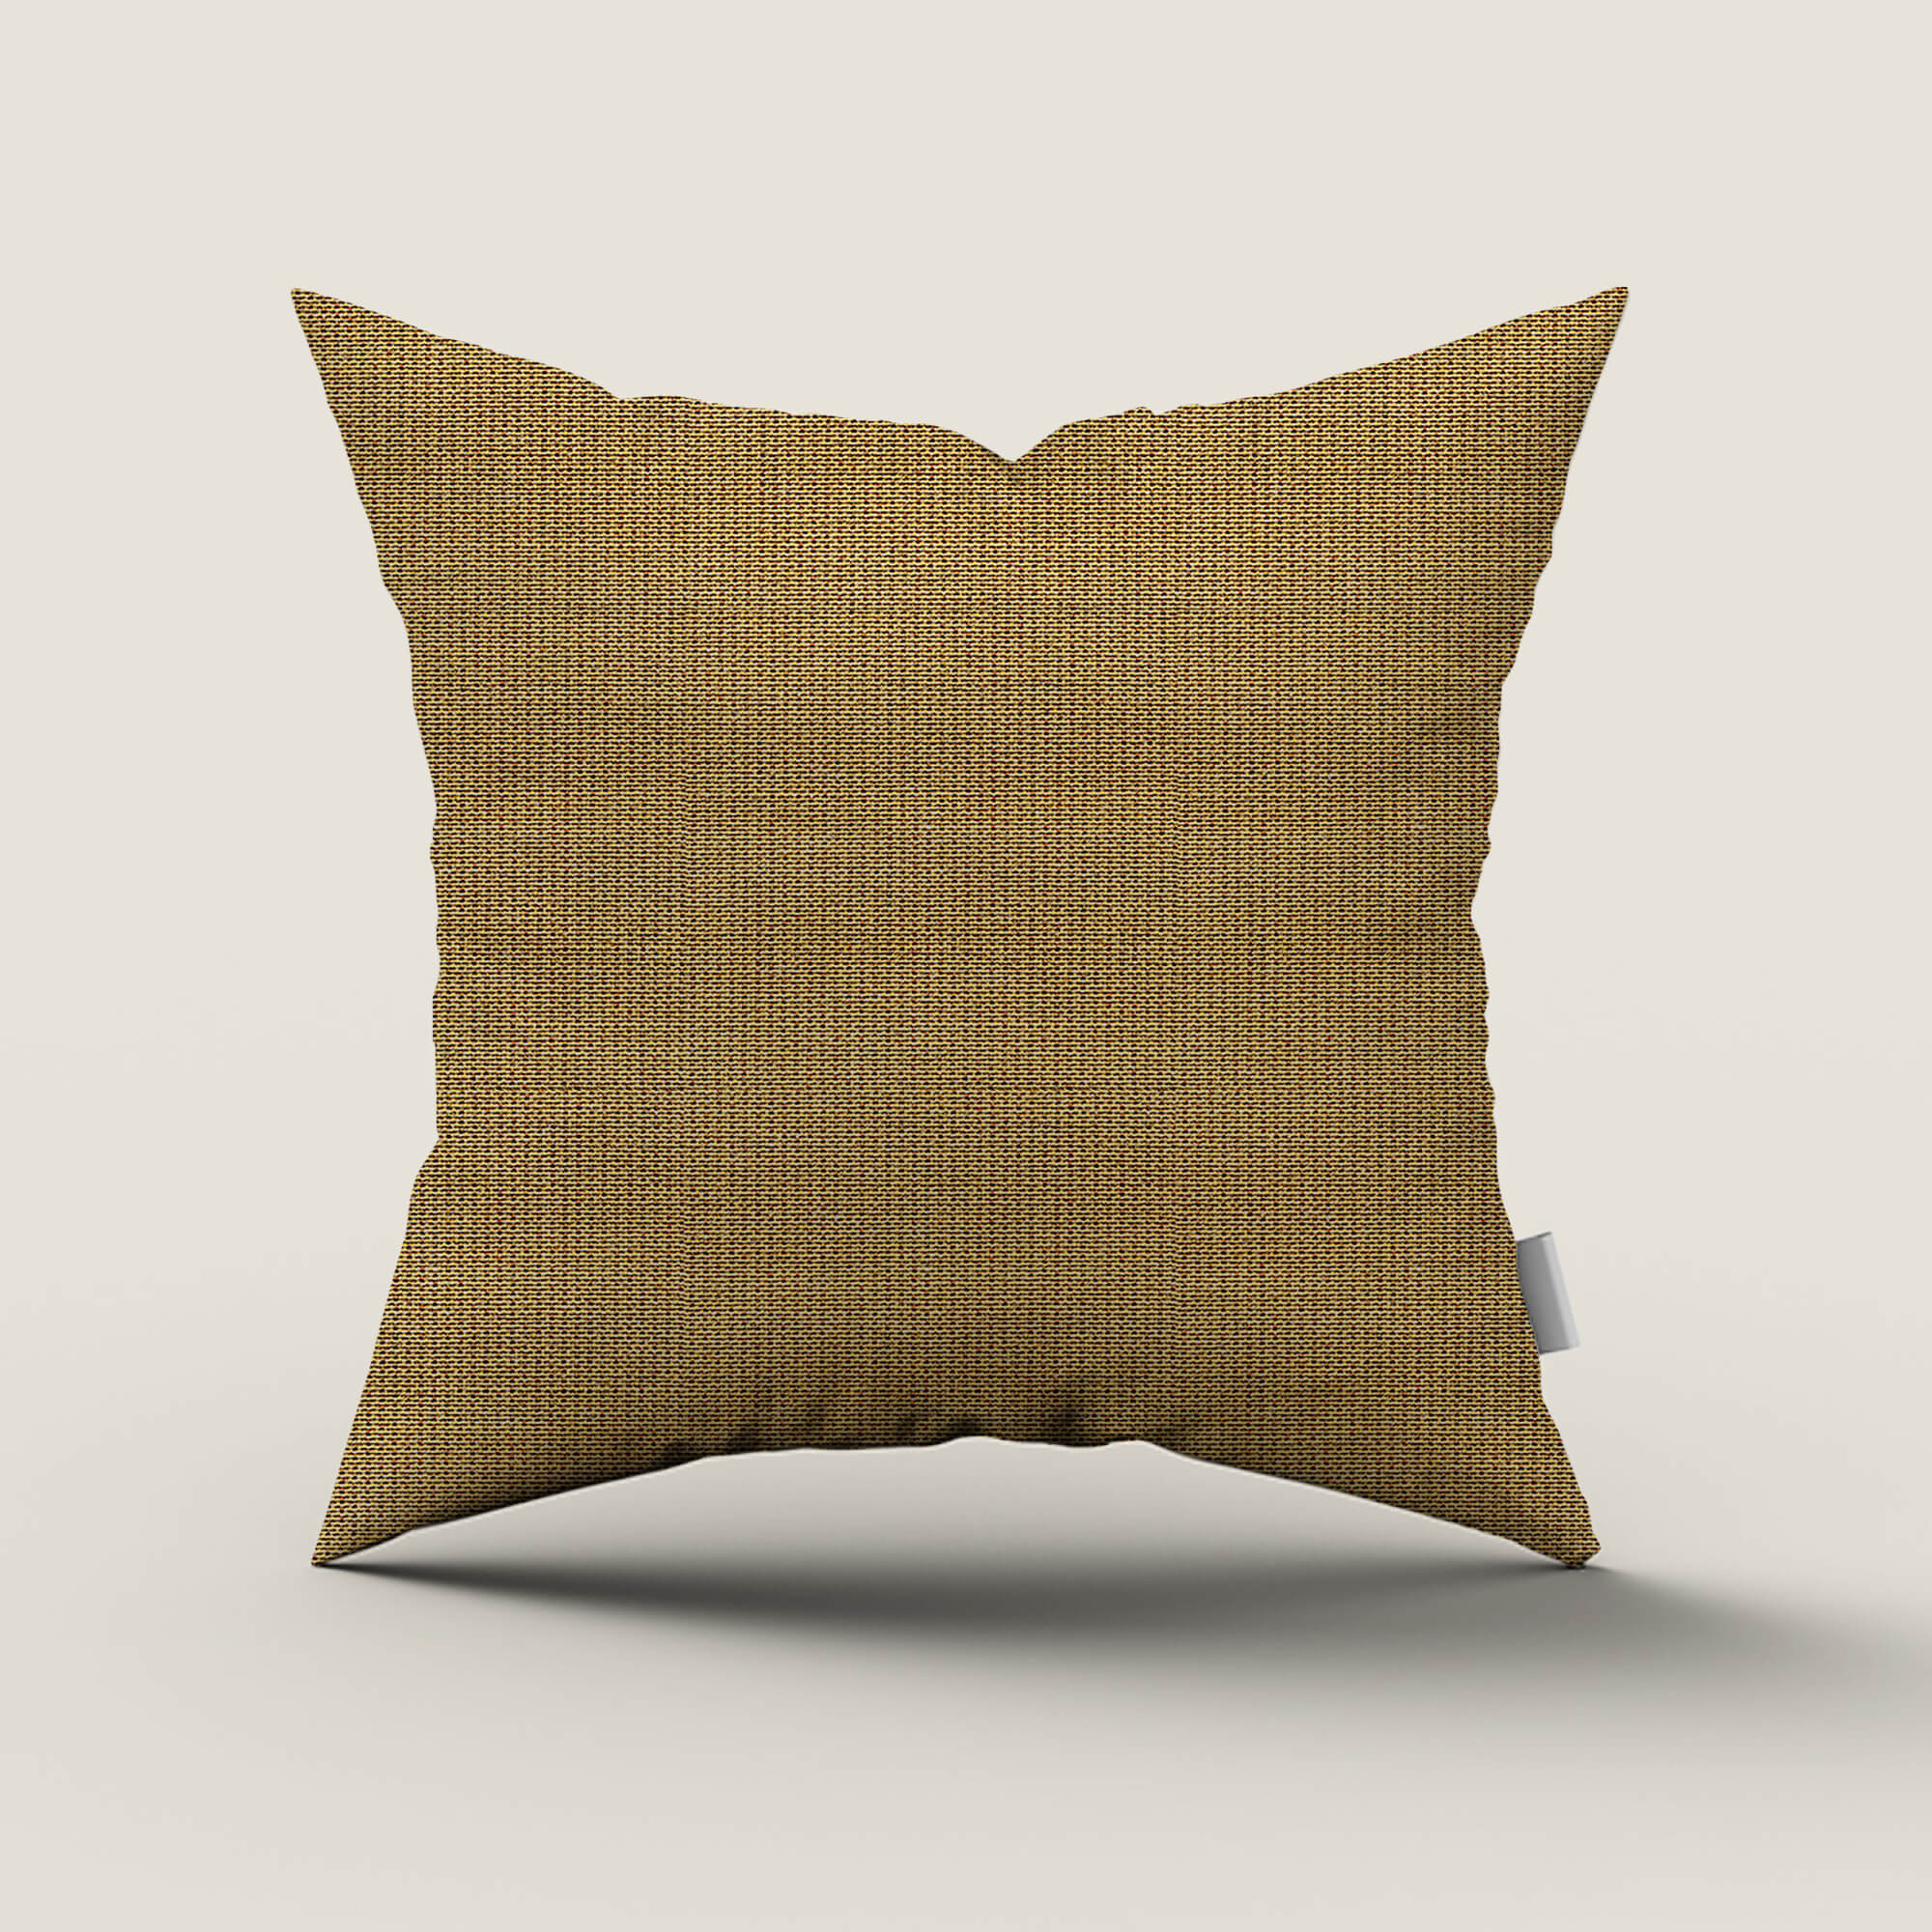 PENGI Waterproof Outdoor Pillow Case 1 Pcs - Blend New Wheat